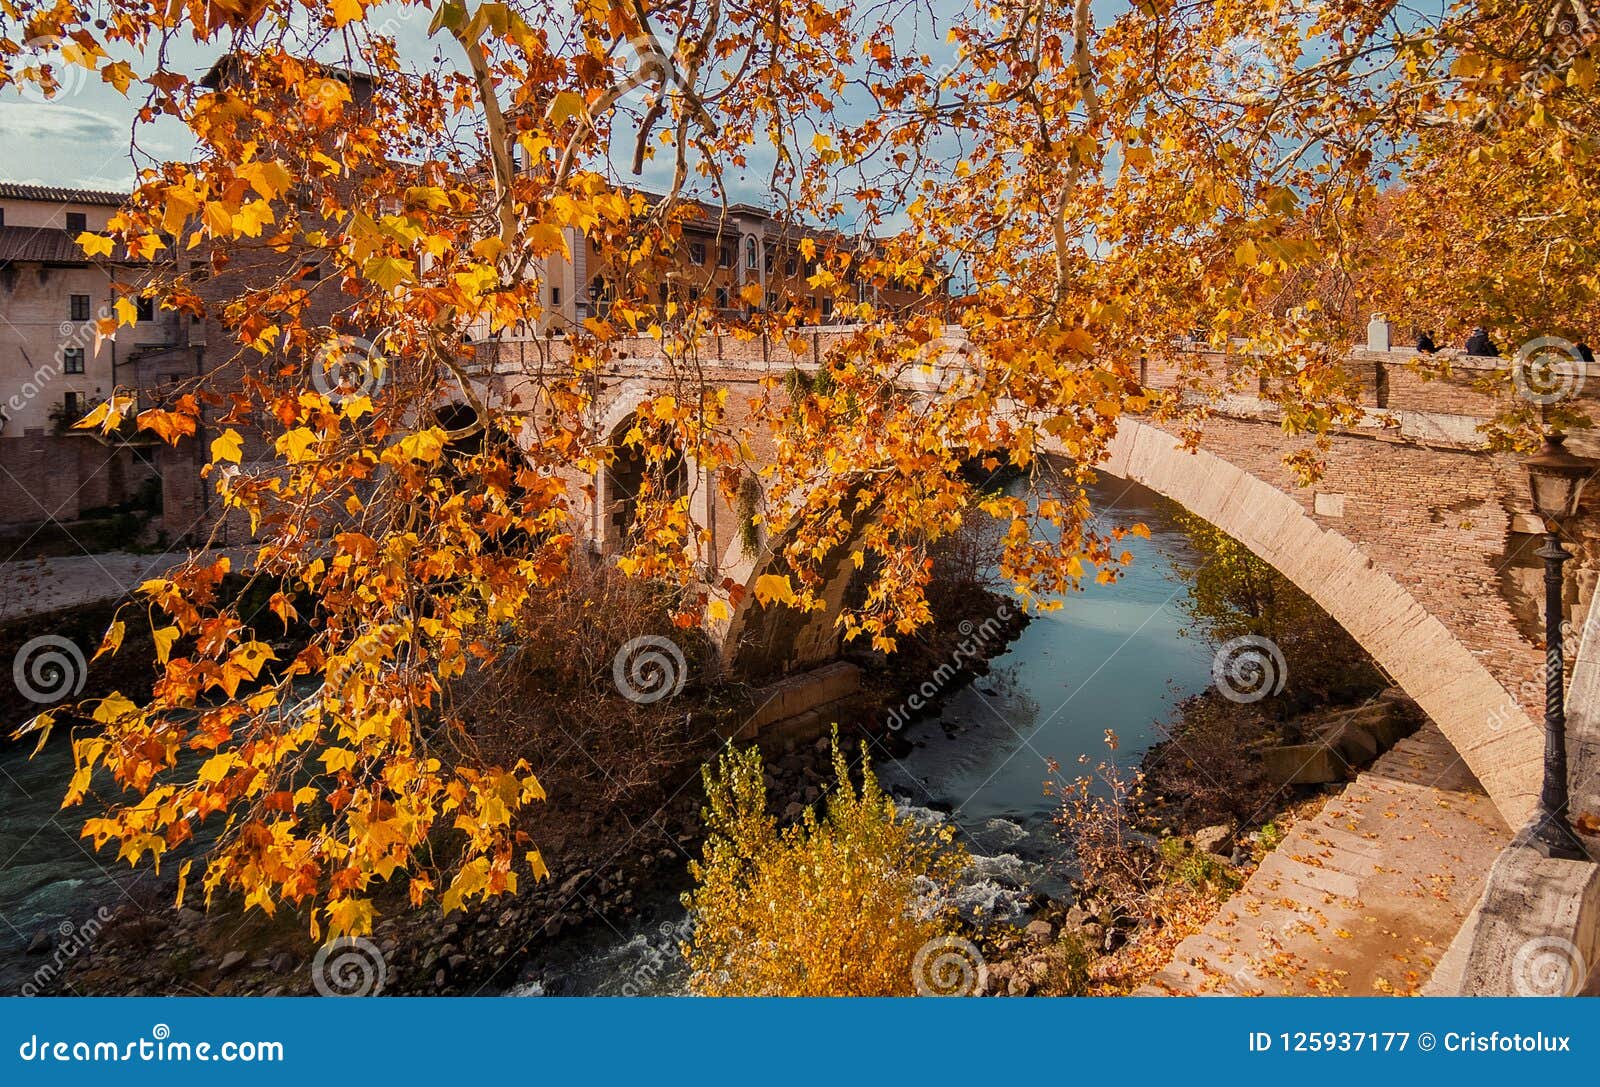 Autumn in Rome stock image. Image of center, rome, autumn - 125937177